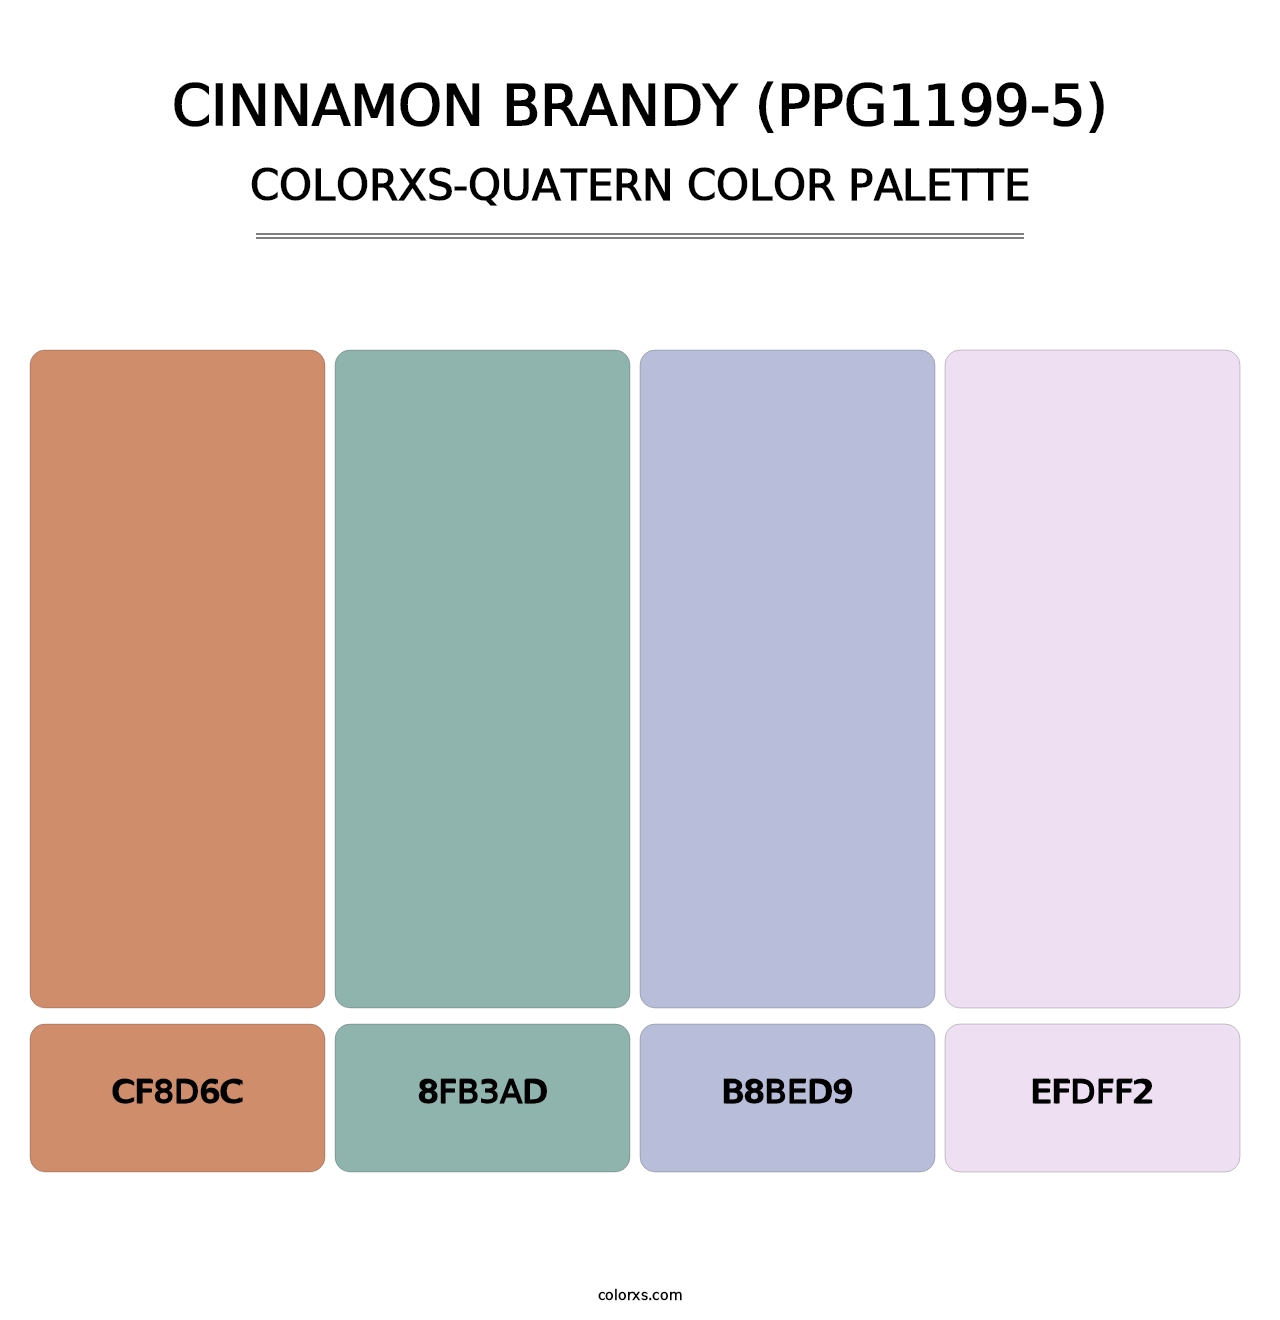 Cinnamon Brandy (PPG1199-5) - Colorxs Quatern Palette